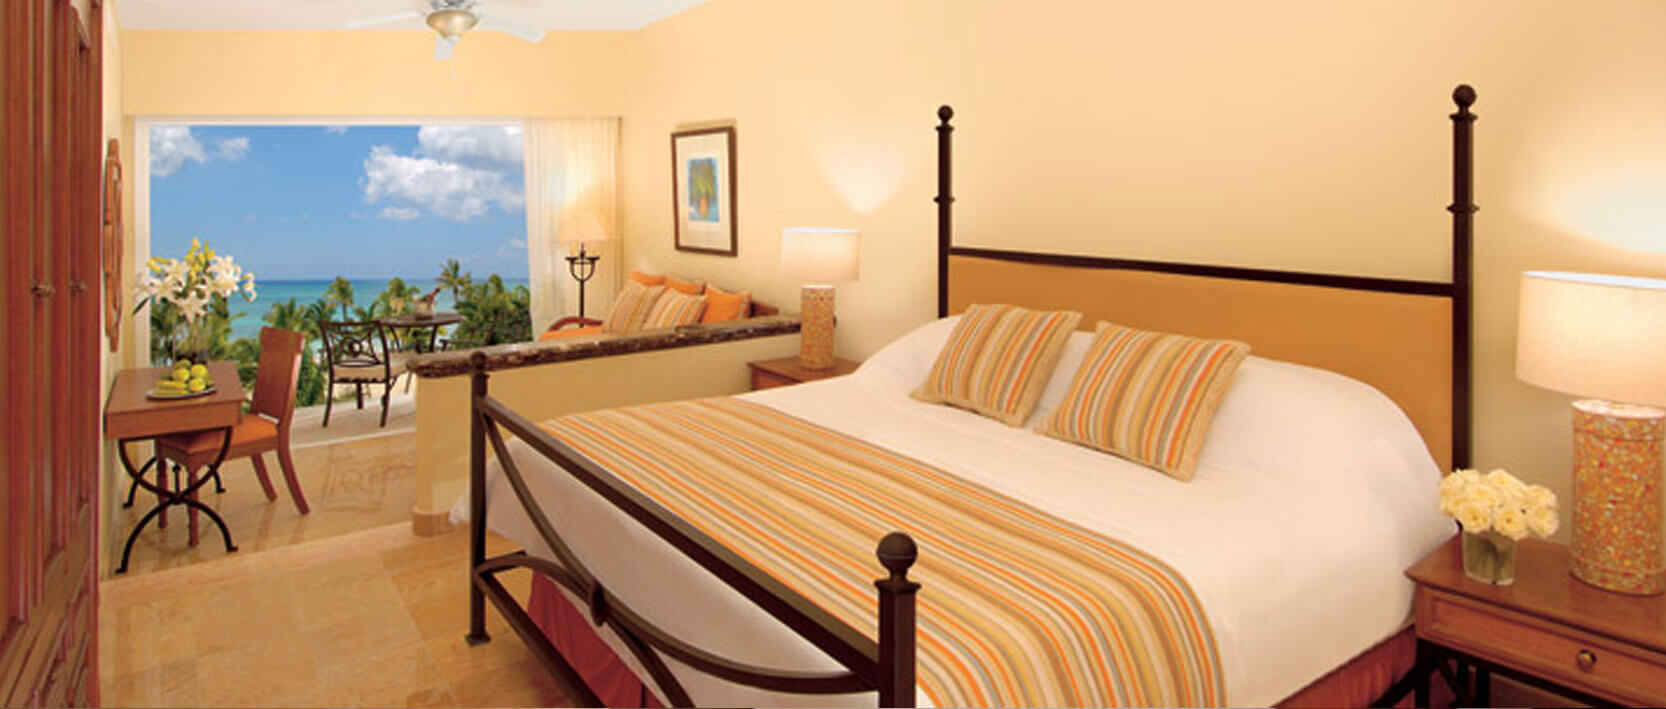 Dreams Tulum Resort Accommodations - Preferred Junior Suite Ocean View